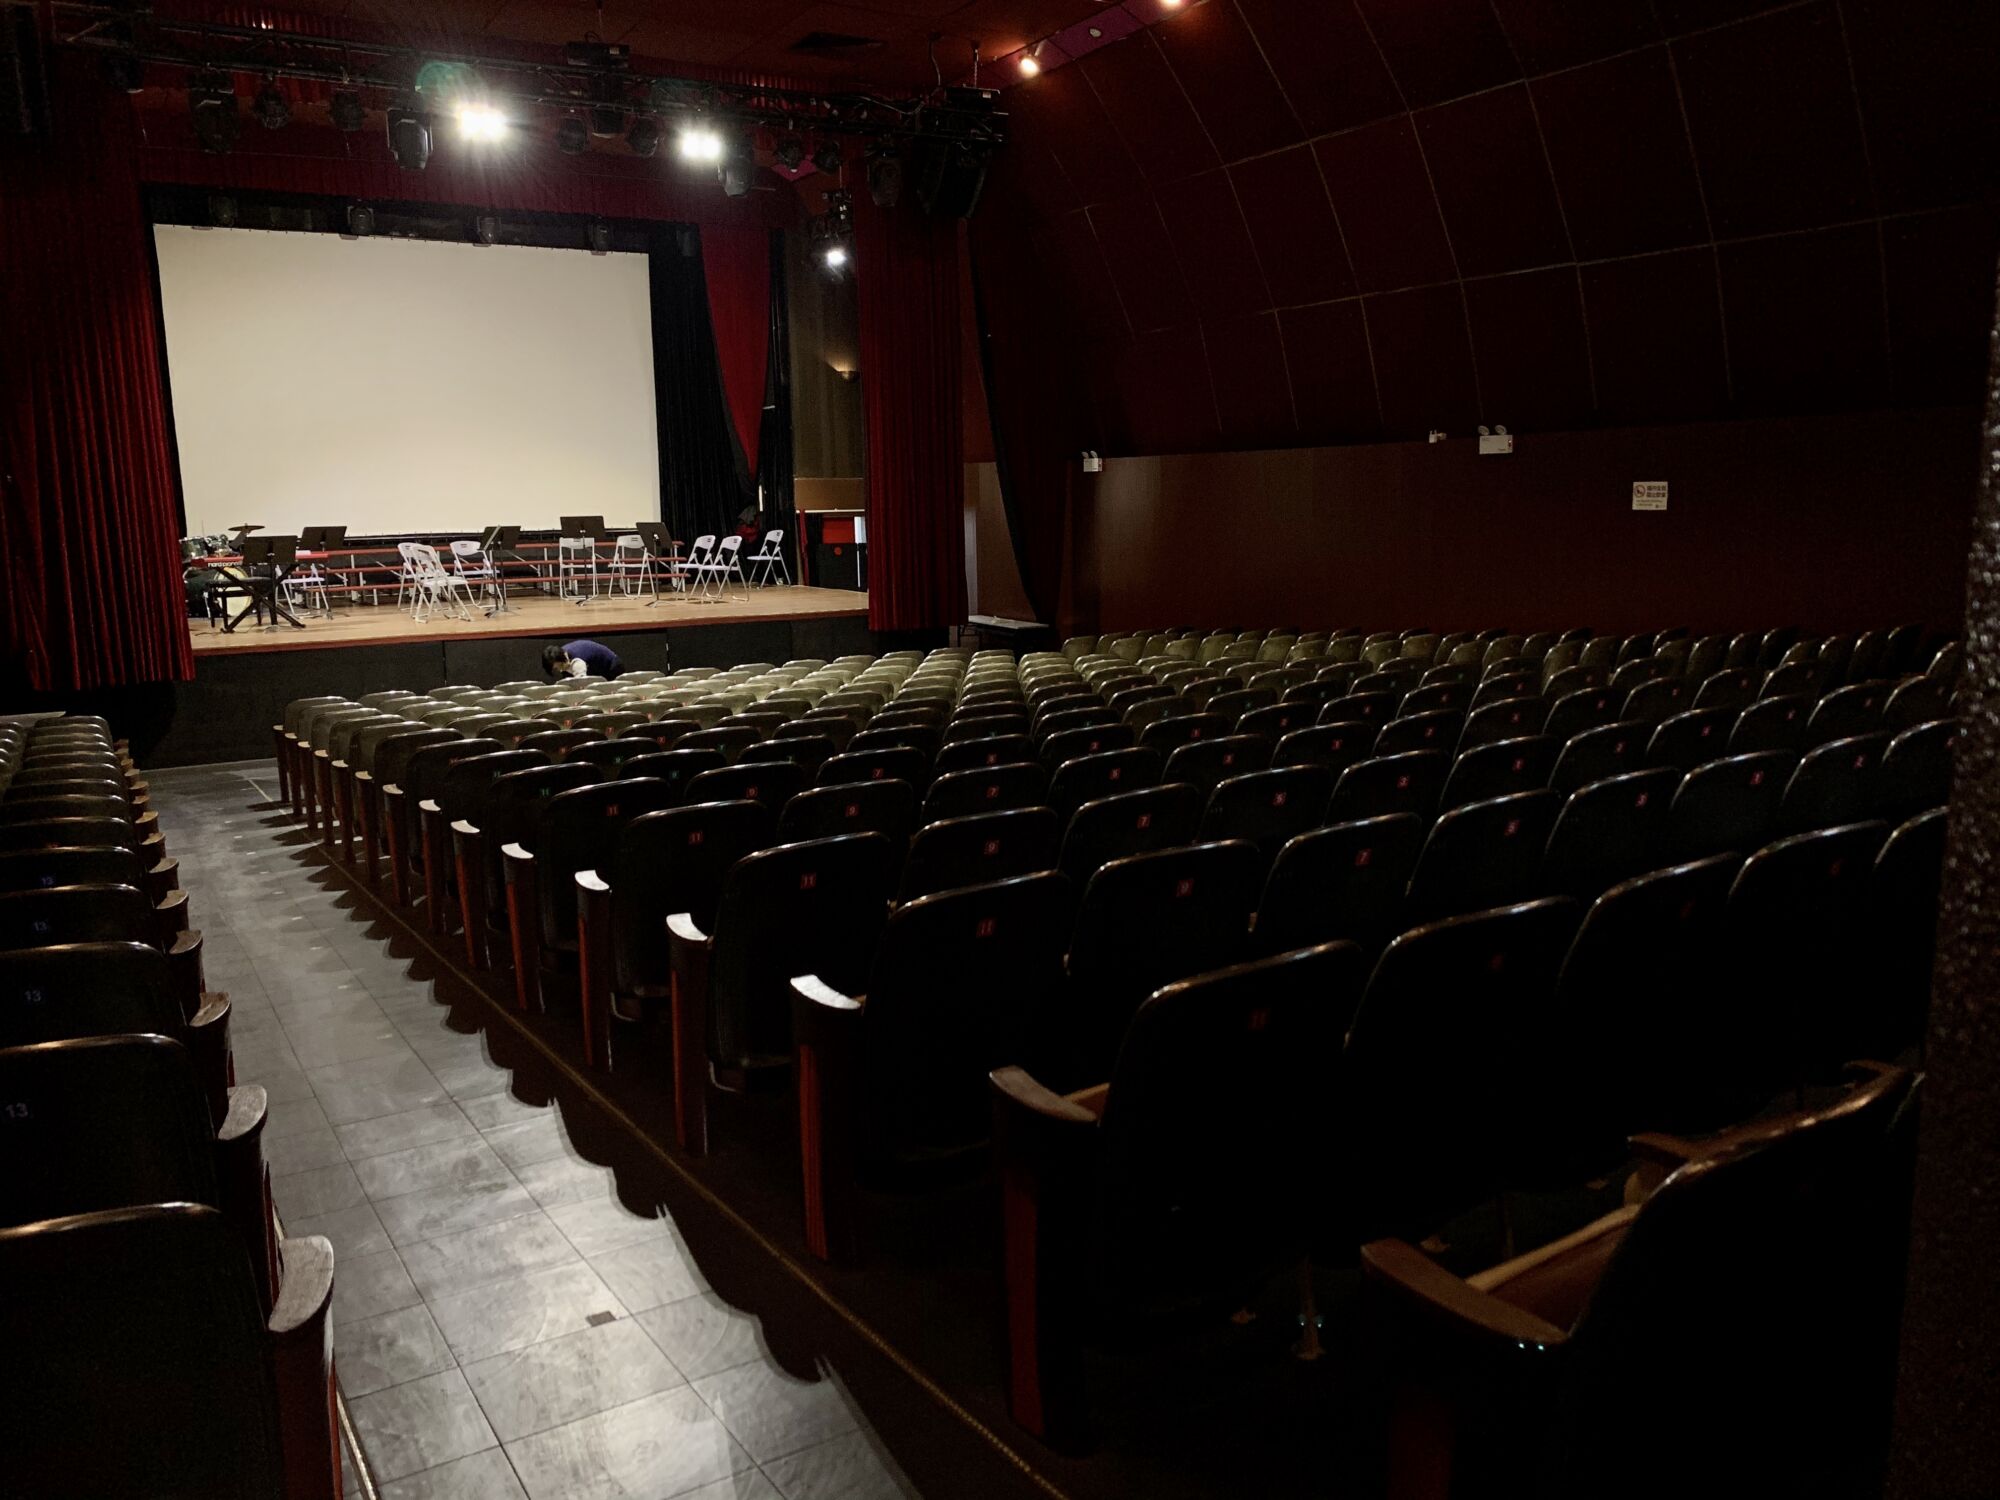 Teatro Capitol Interior Cinema Hall Chairs and Screen Wide Macau Lifestyle